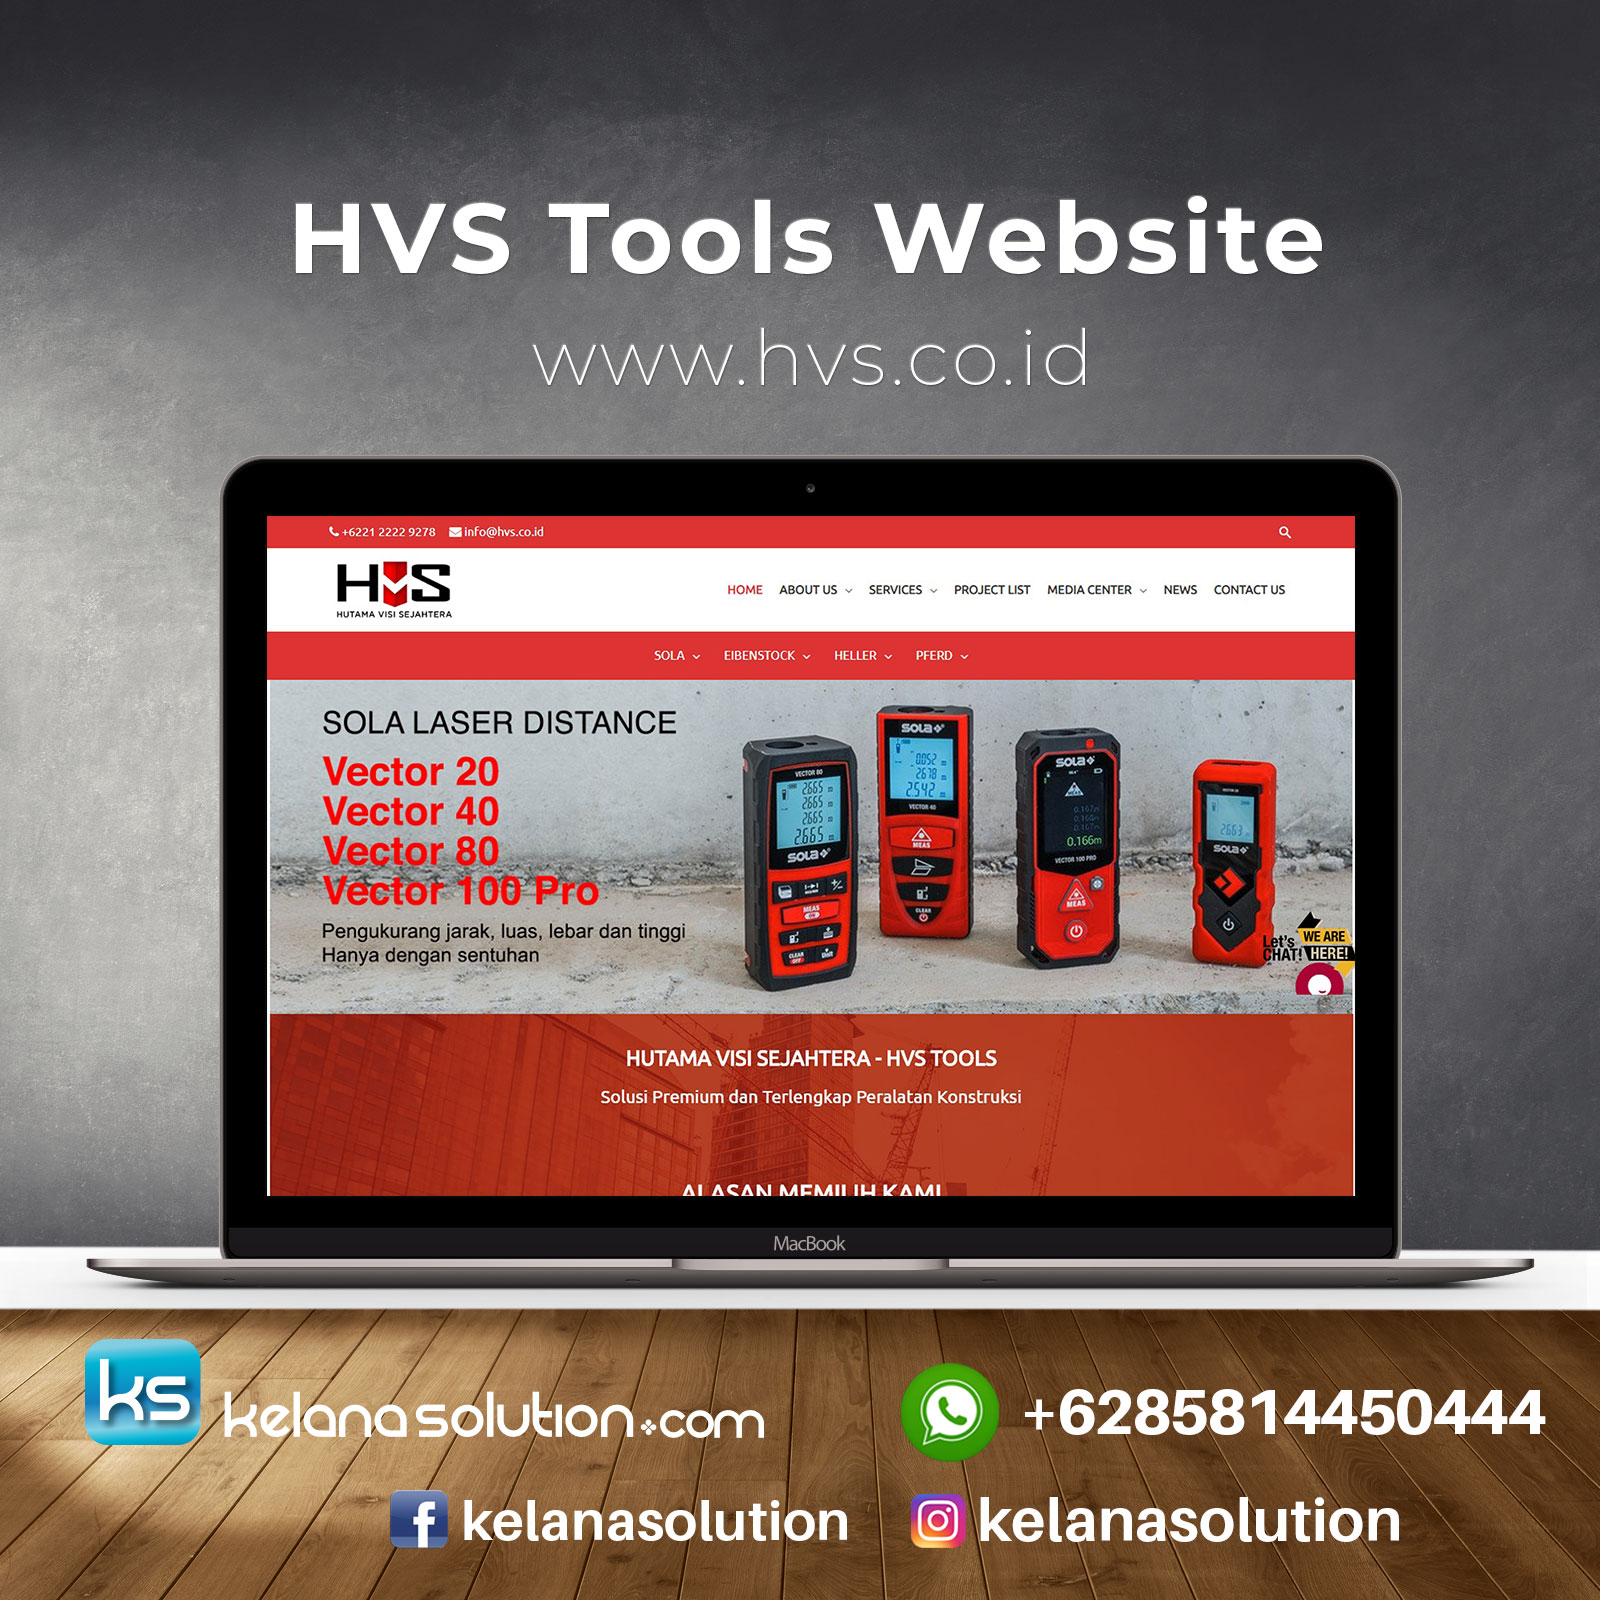 HVS Tools Official Website